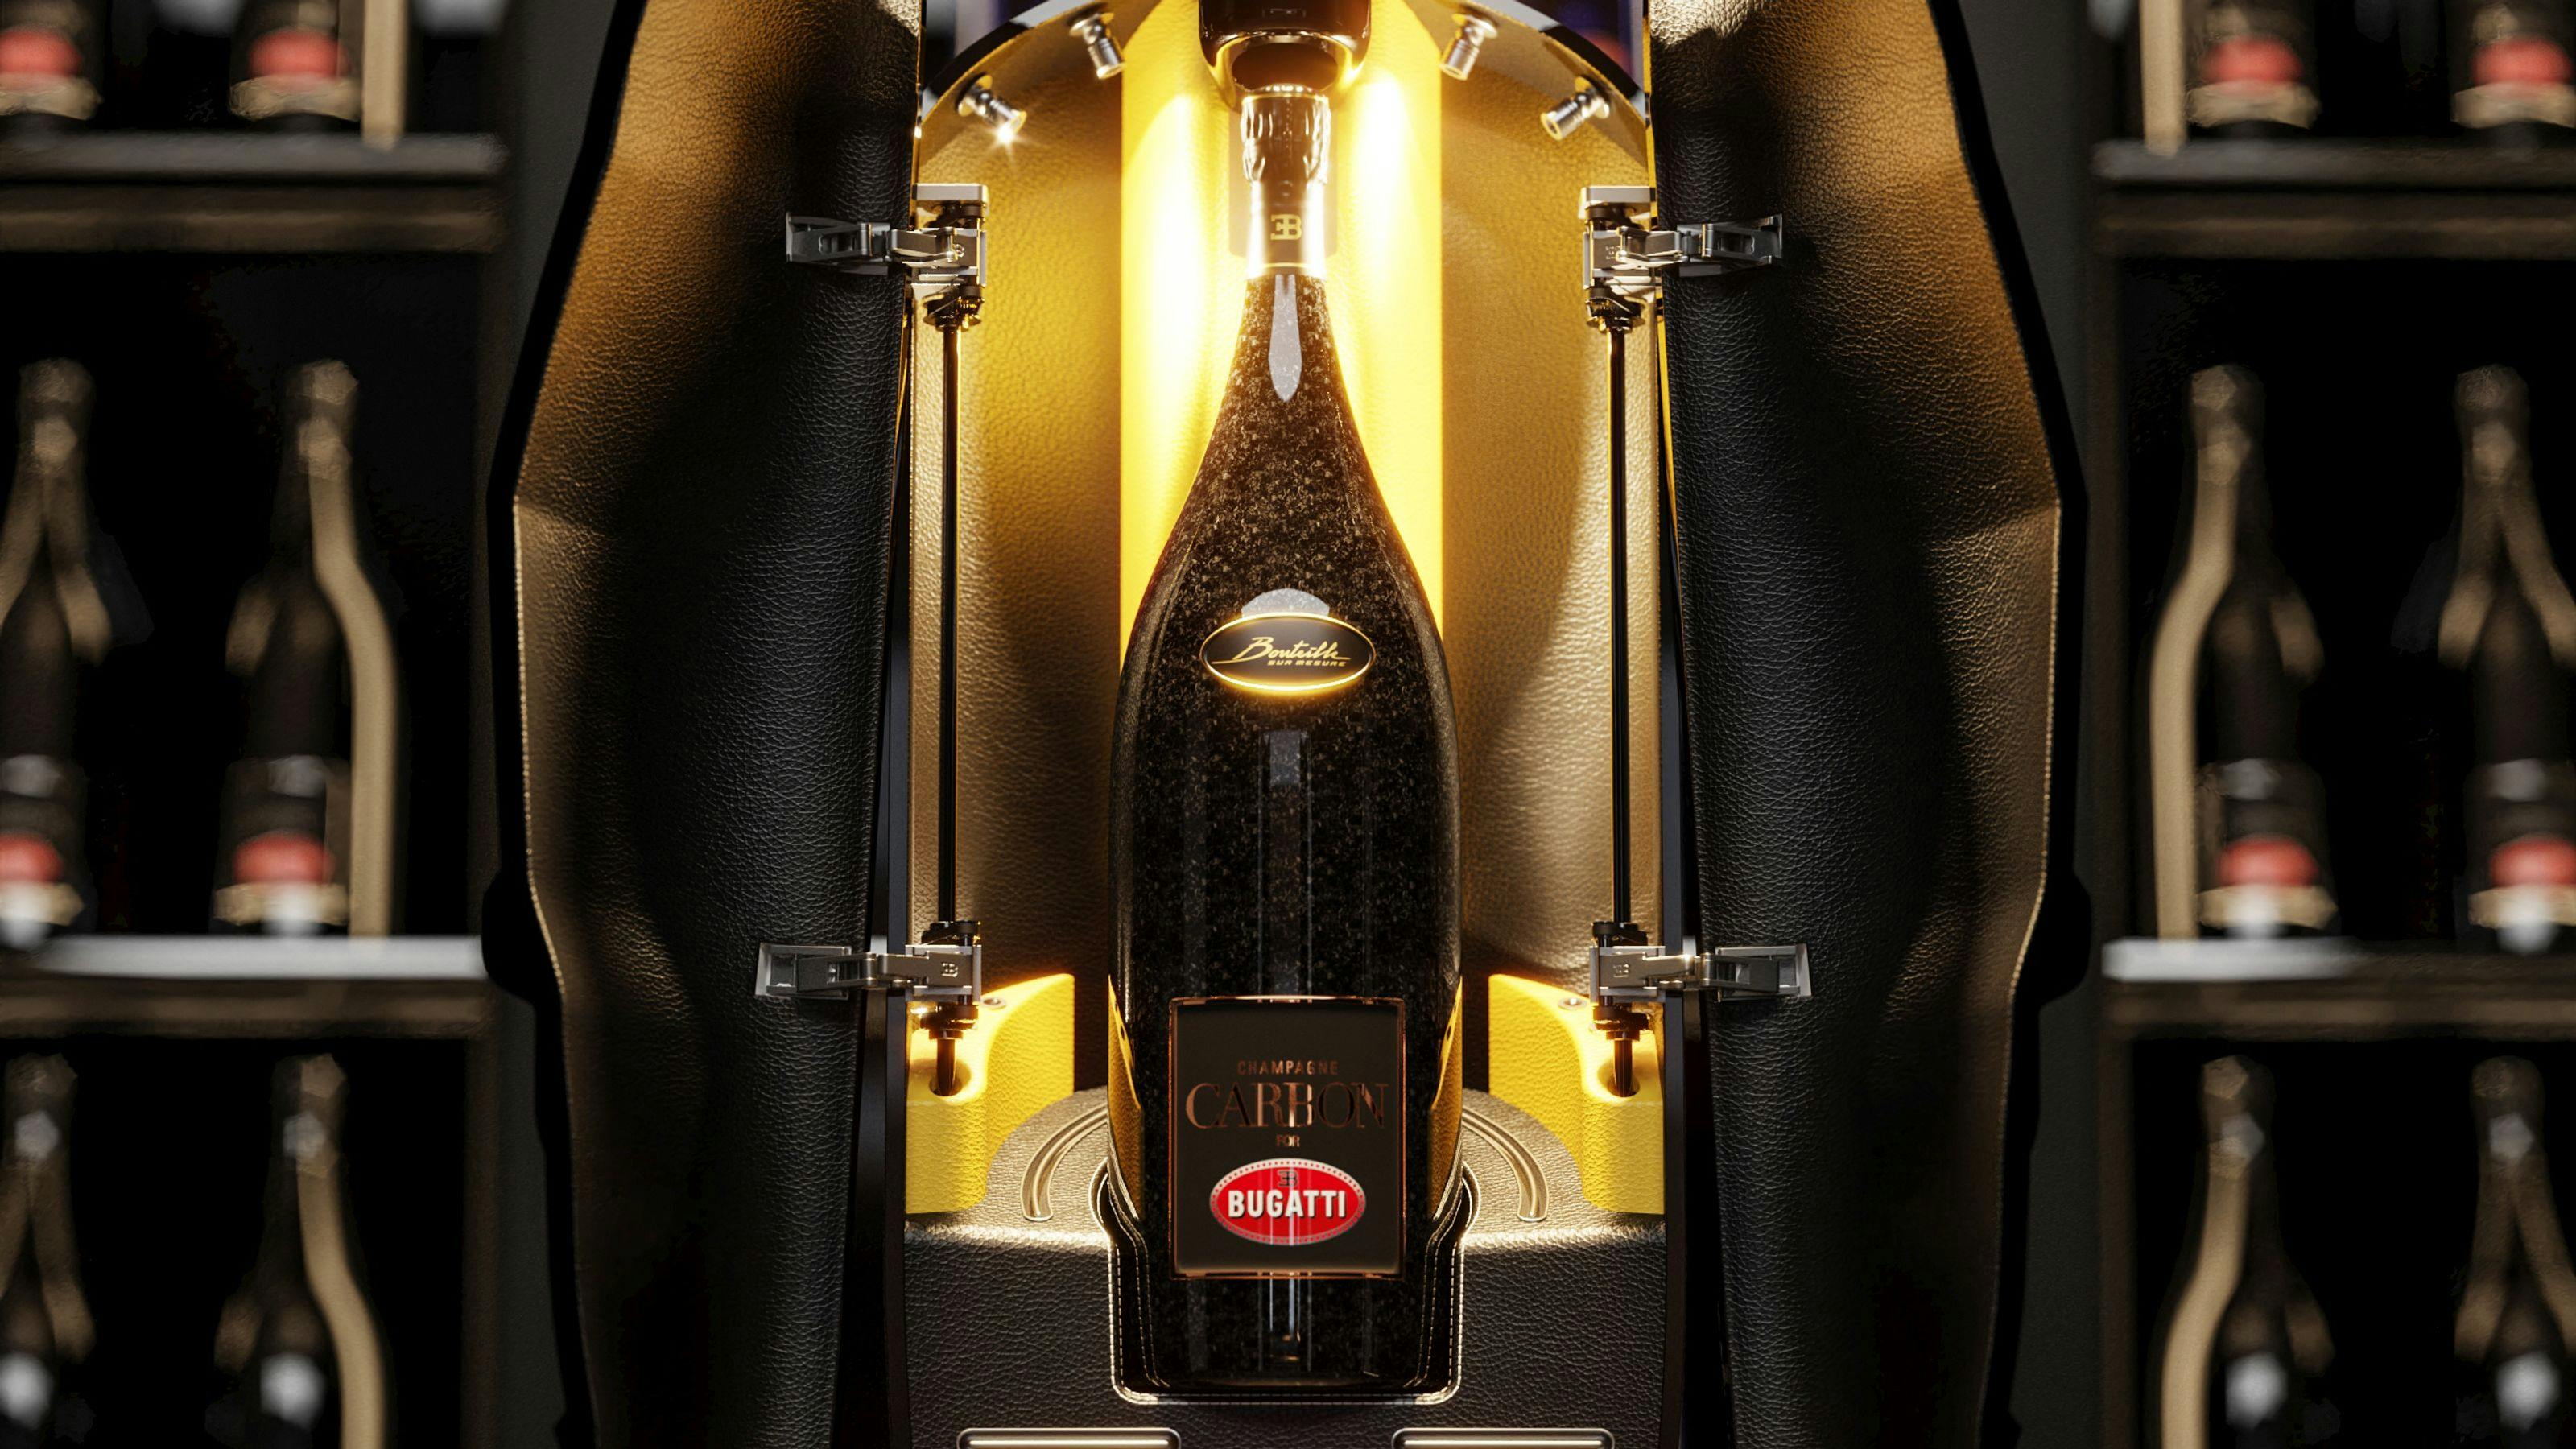 Bugatti and Champagne Carbon reveal ‘La Bouteille Sur Mesure’